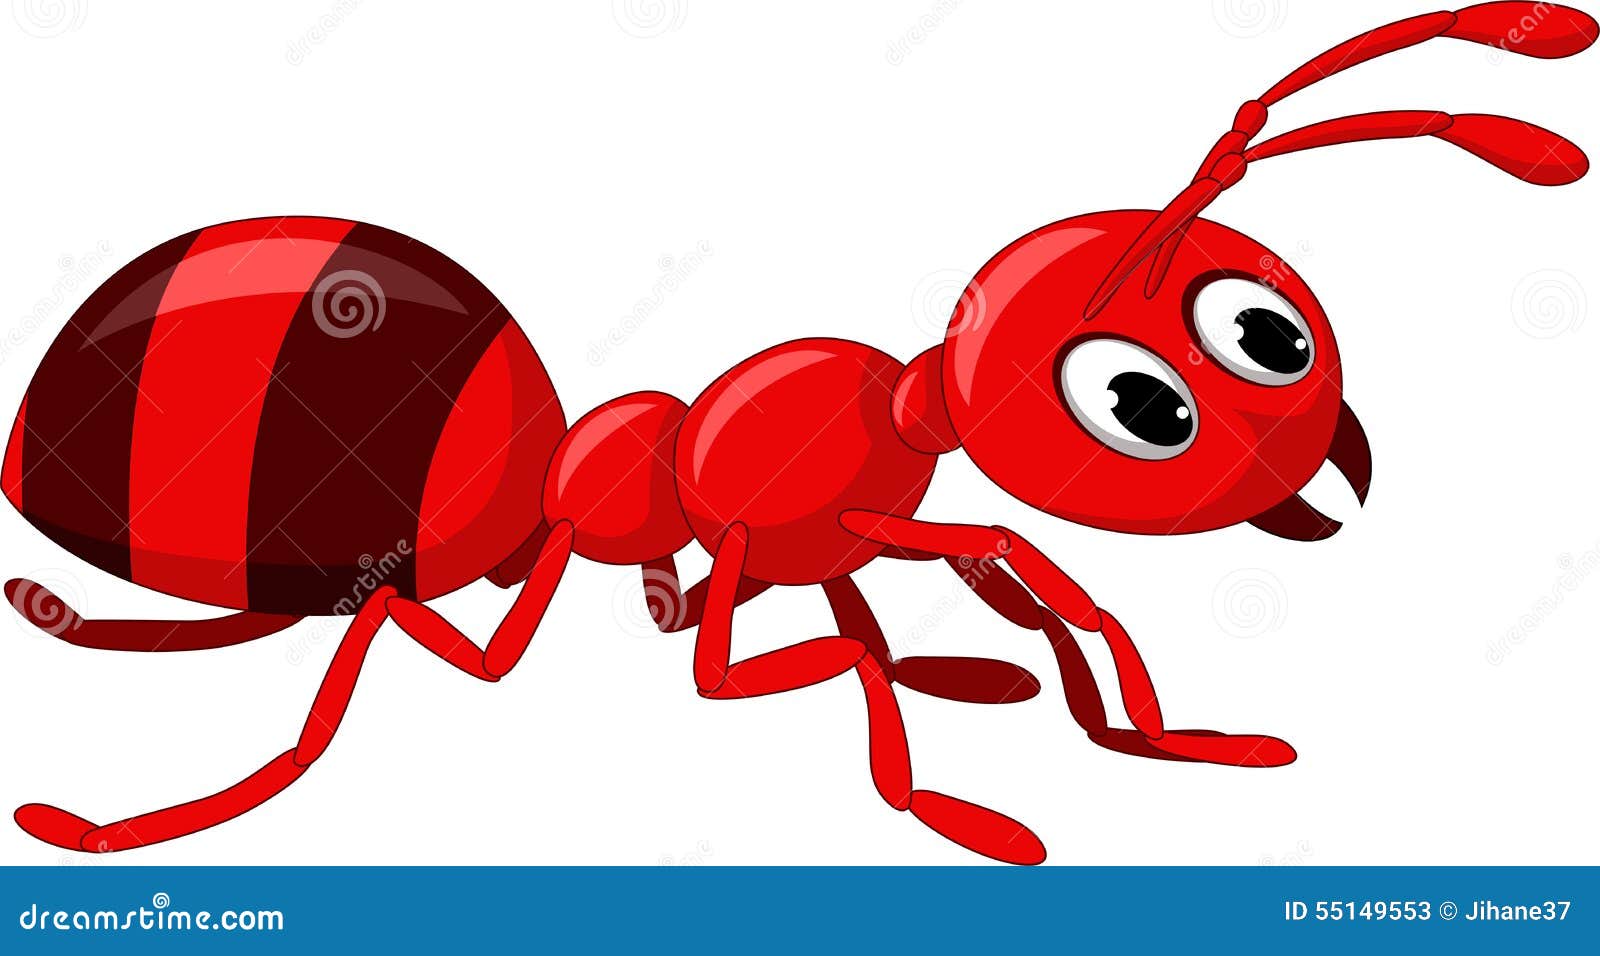 cartoon ant clipart - photo #49